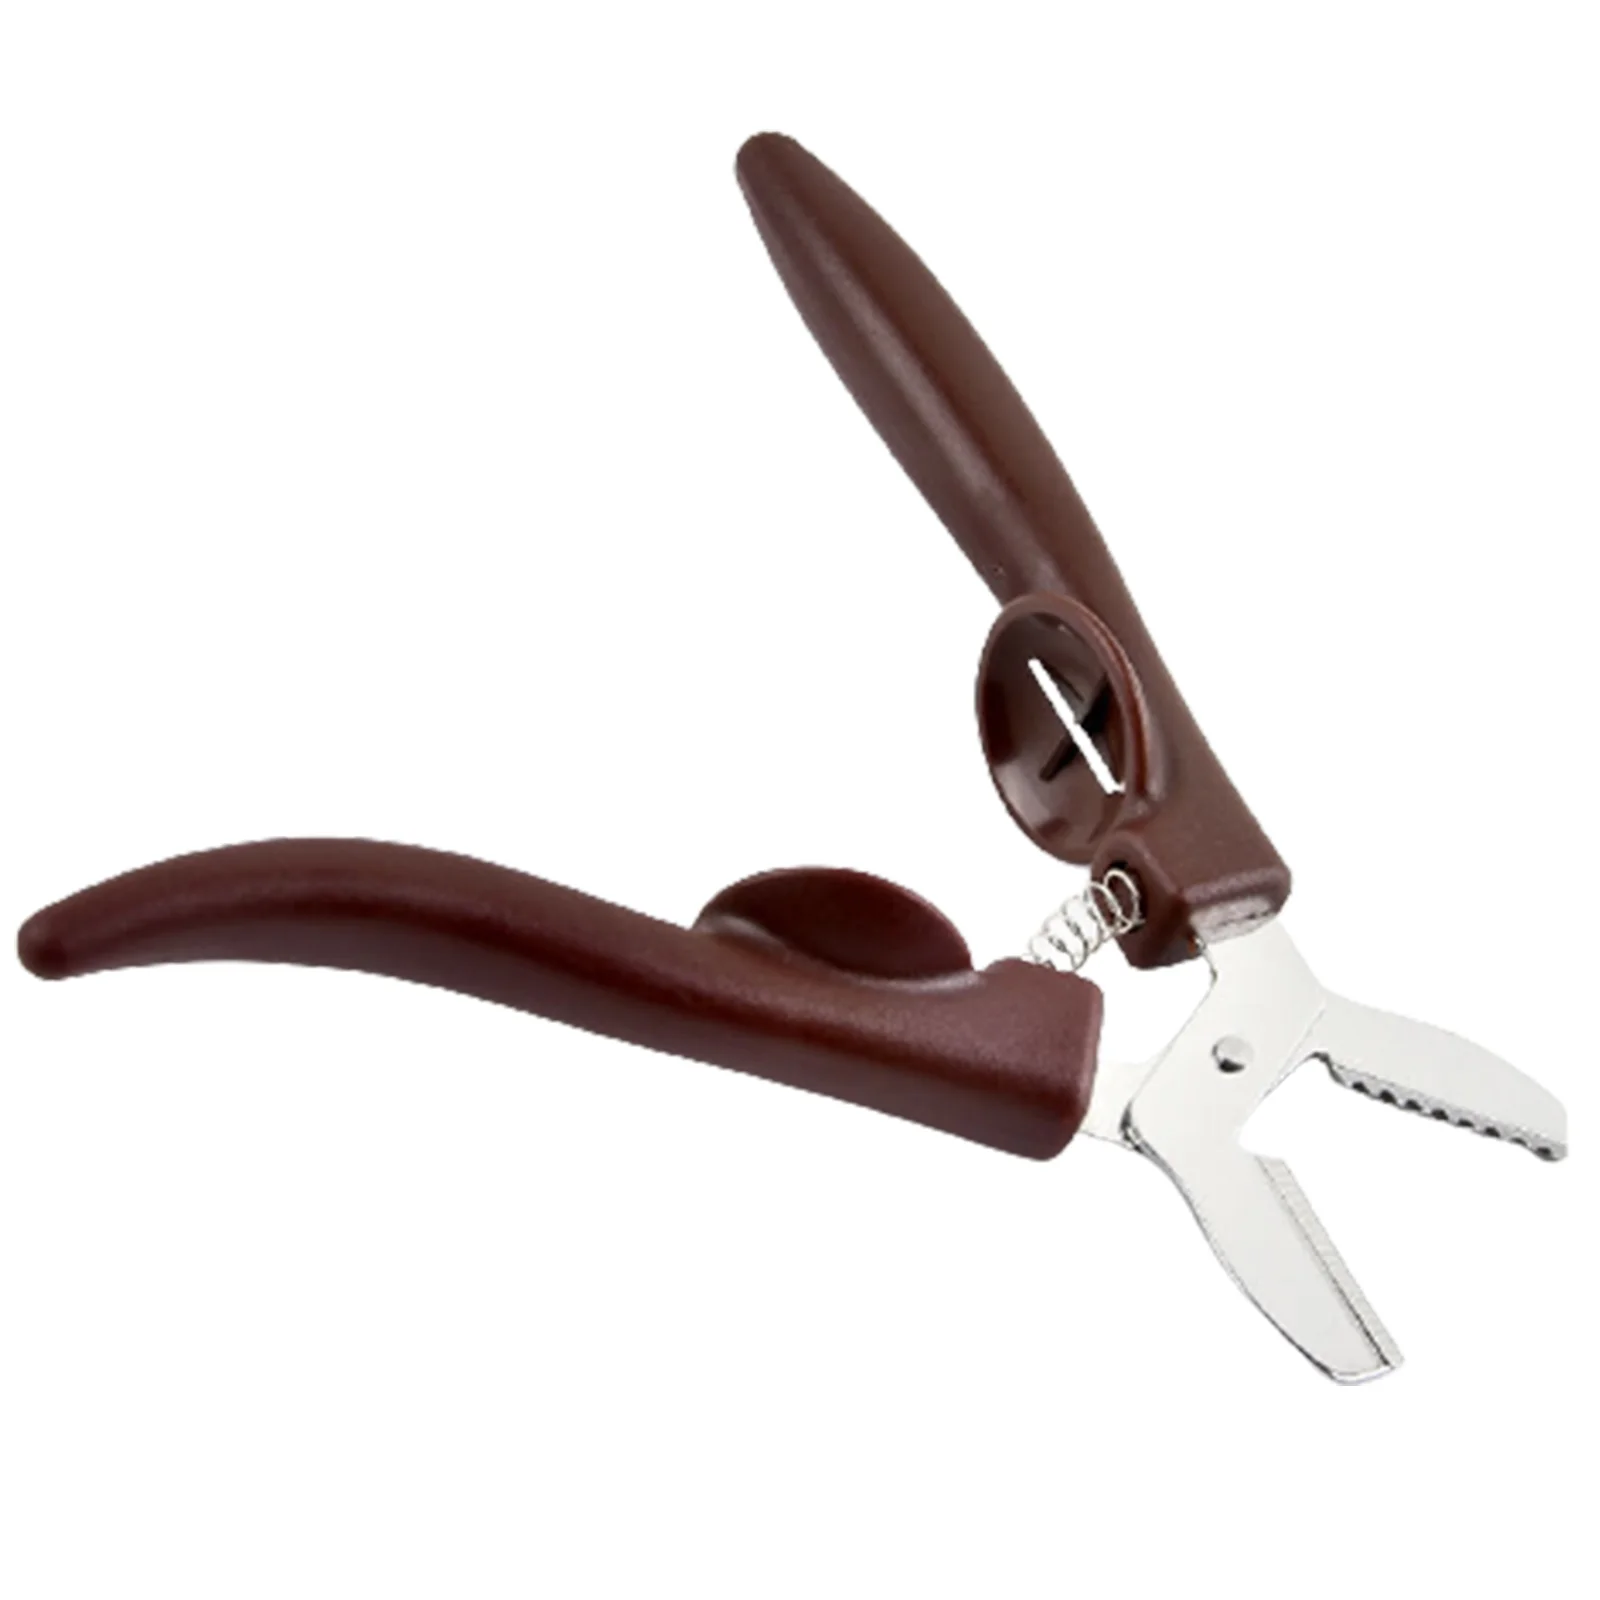 

Practical Chestnut Pliers Chestnut Peeler Chestnut Cross Scissors Nut Shelling Tools Kitchen Accessories